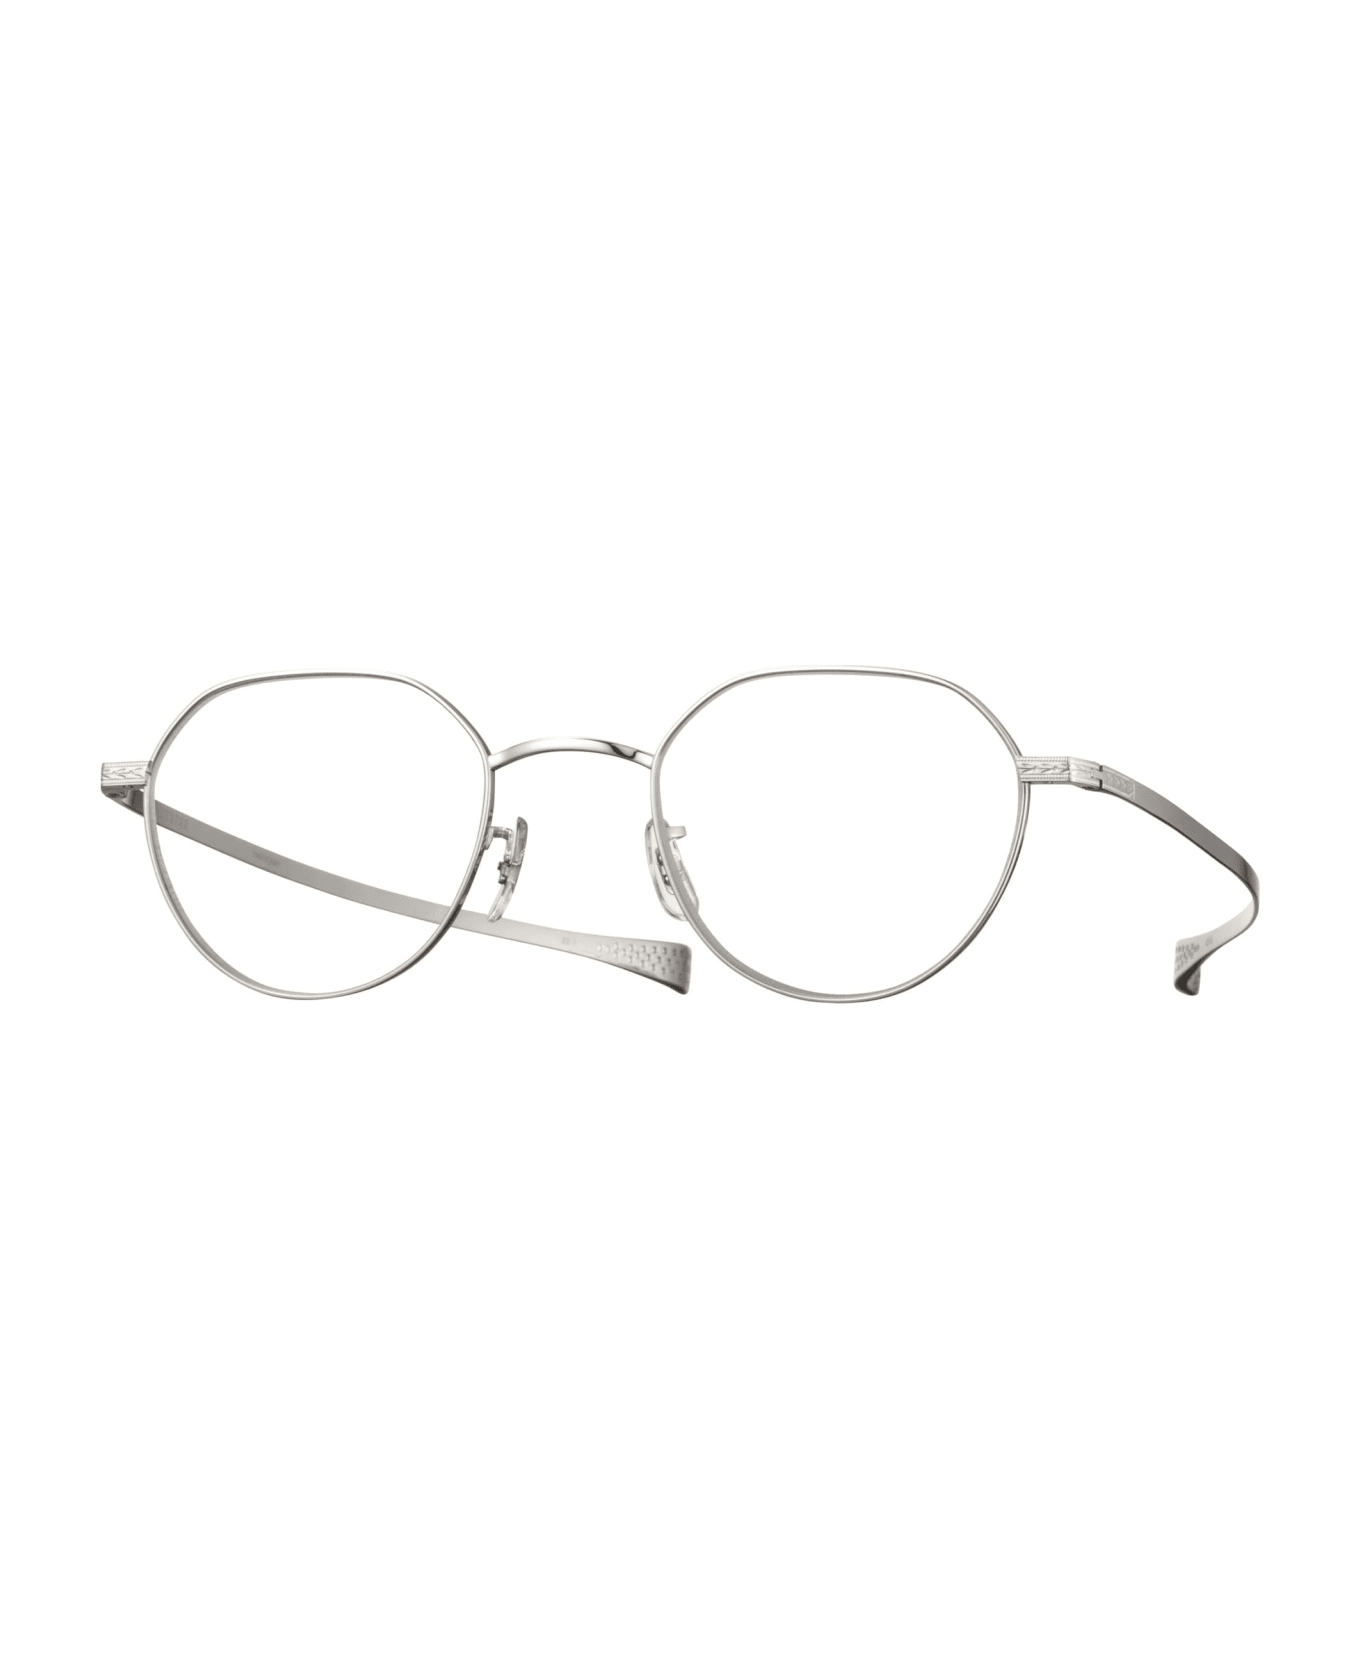 Eyevan 7285 Marshal - Silver Rx Glasses - Silver